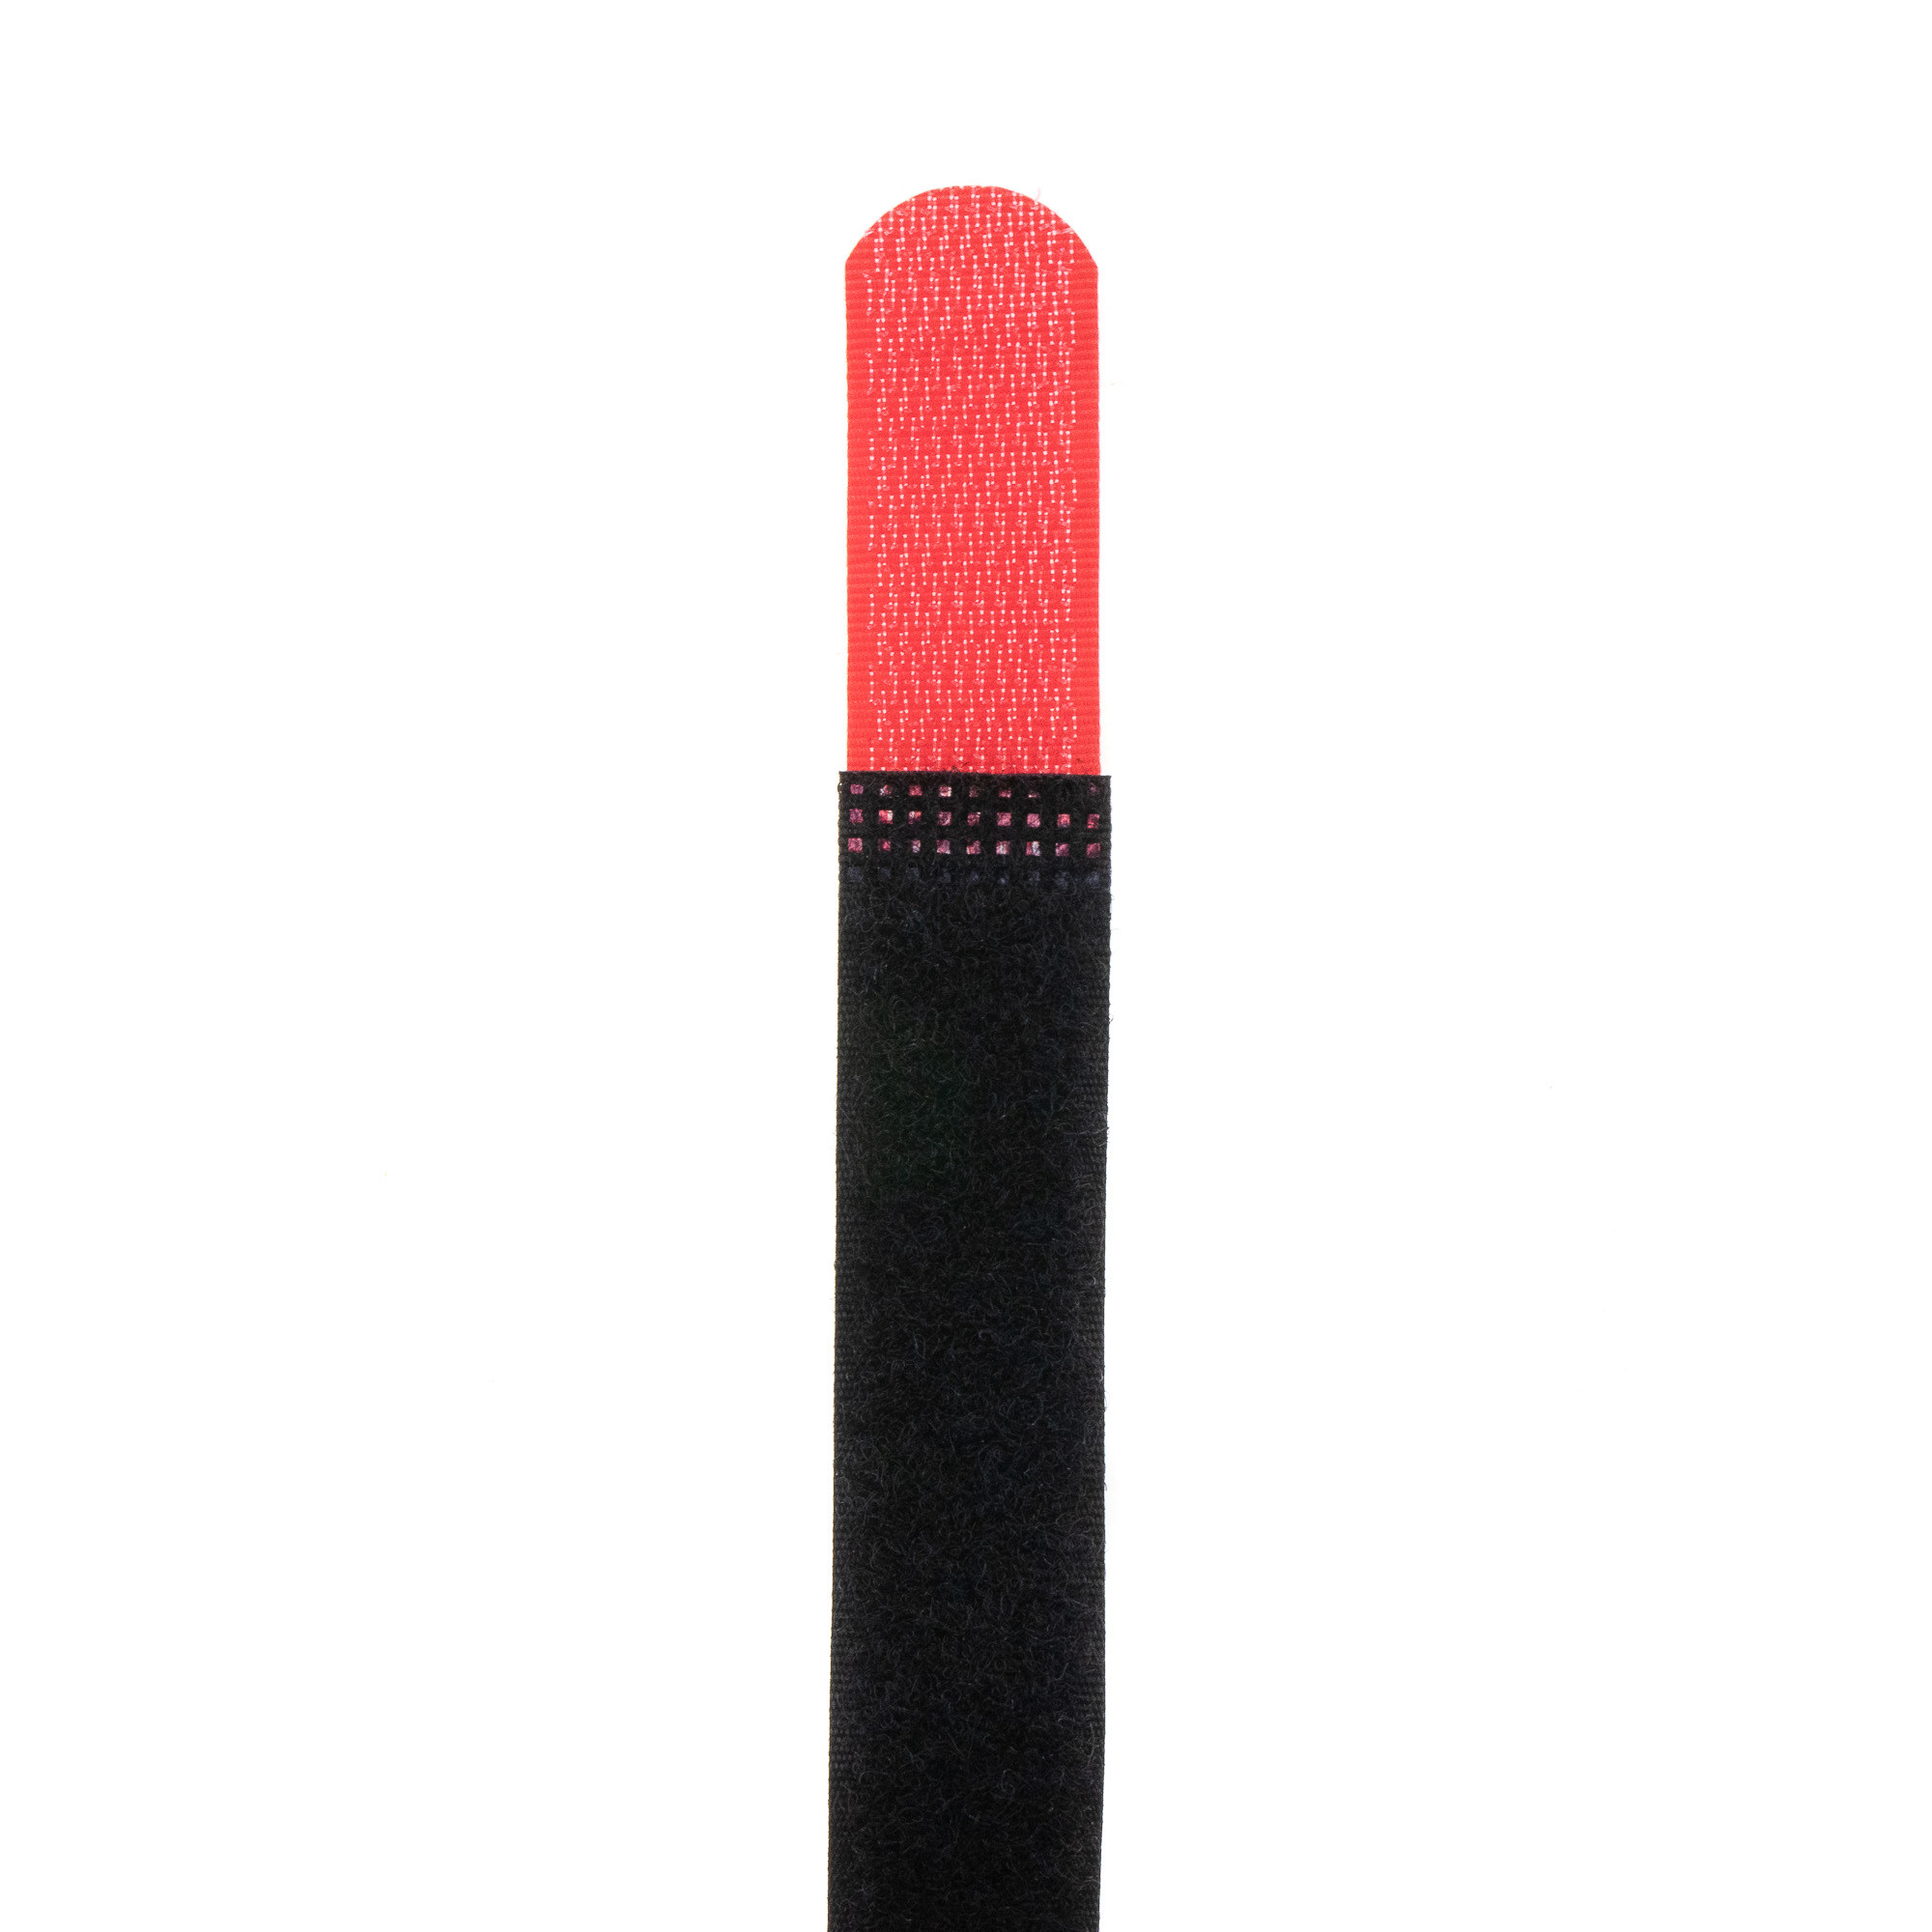 Hook-and-loop strap 400x30, black/red, 10PCS